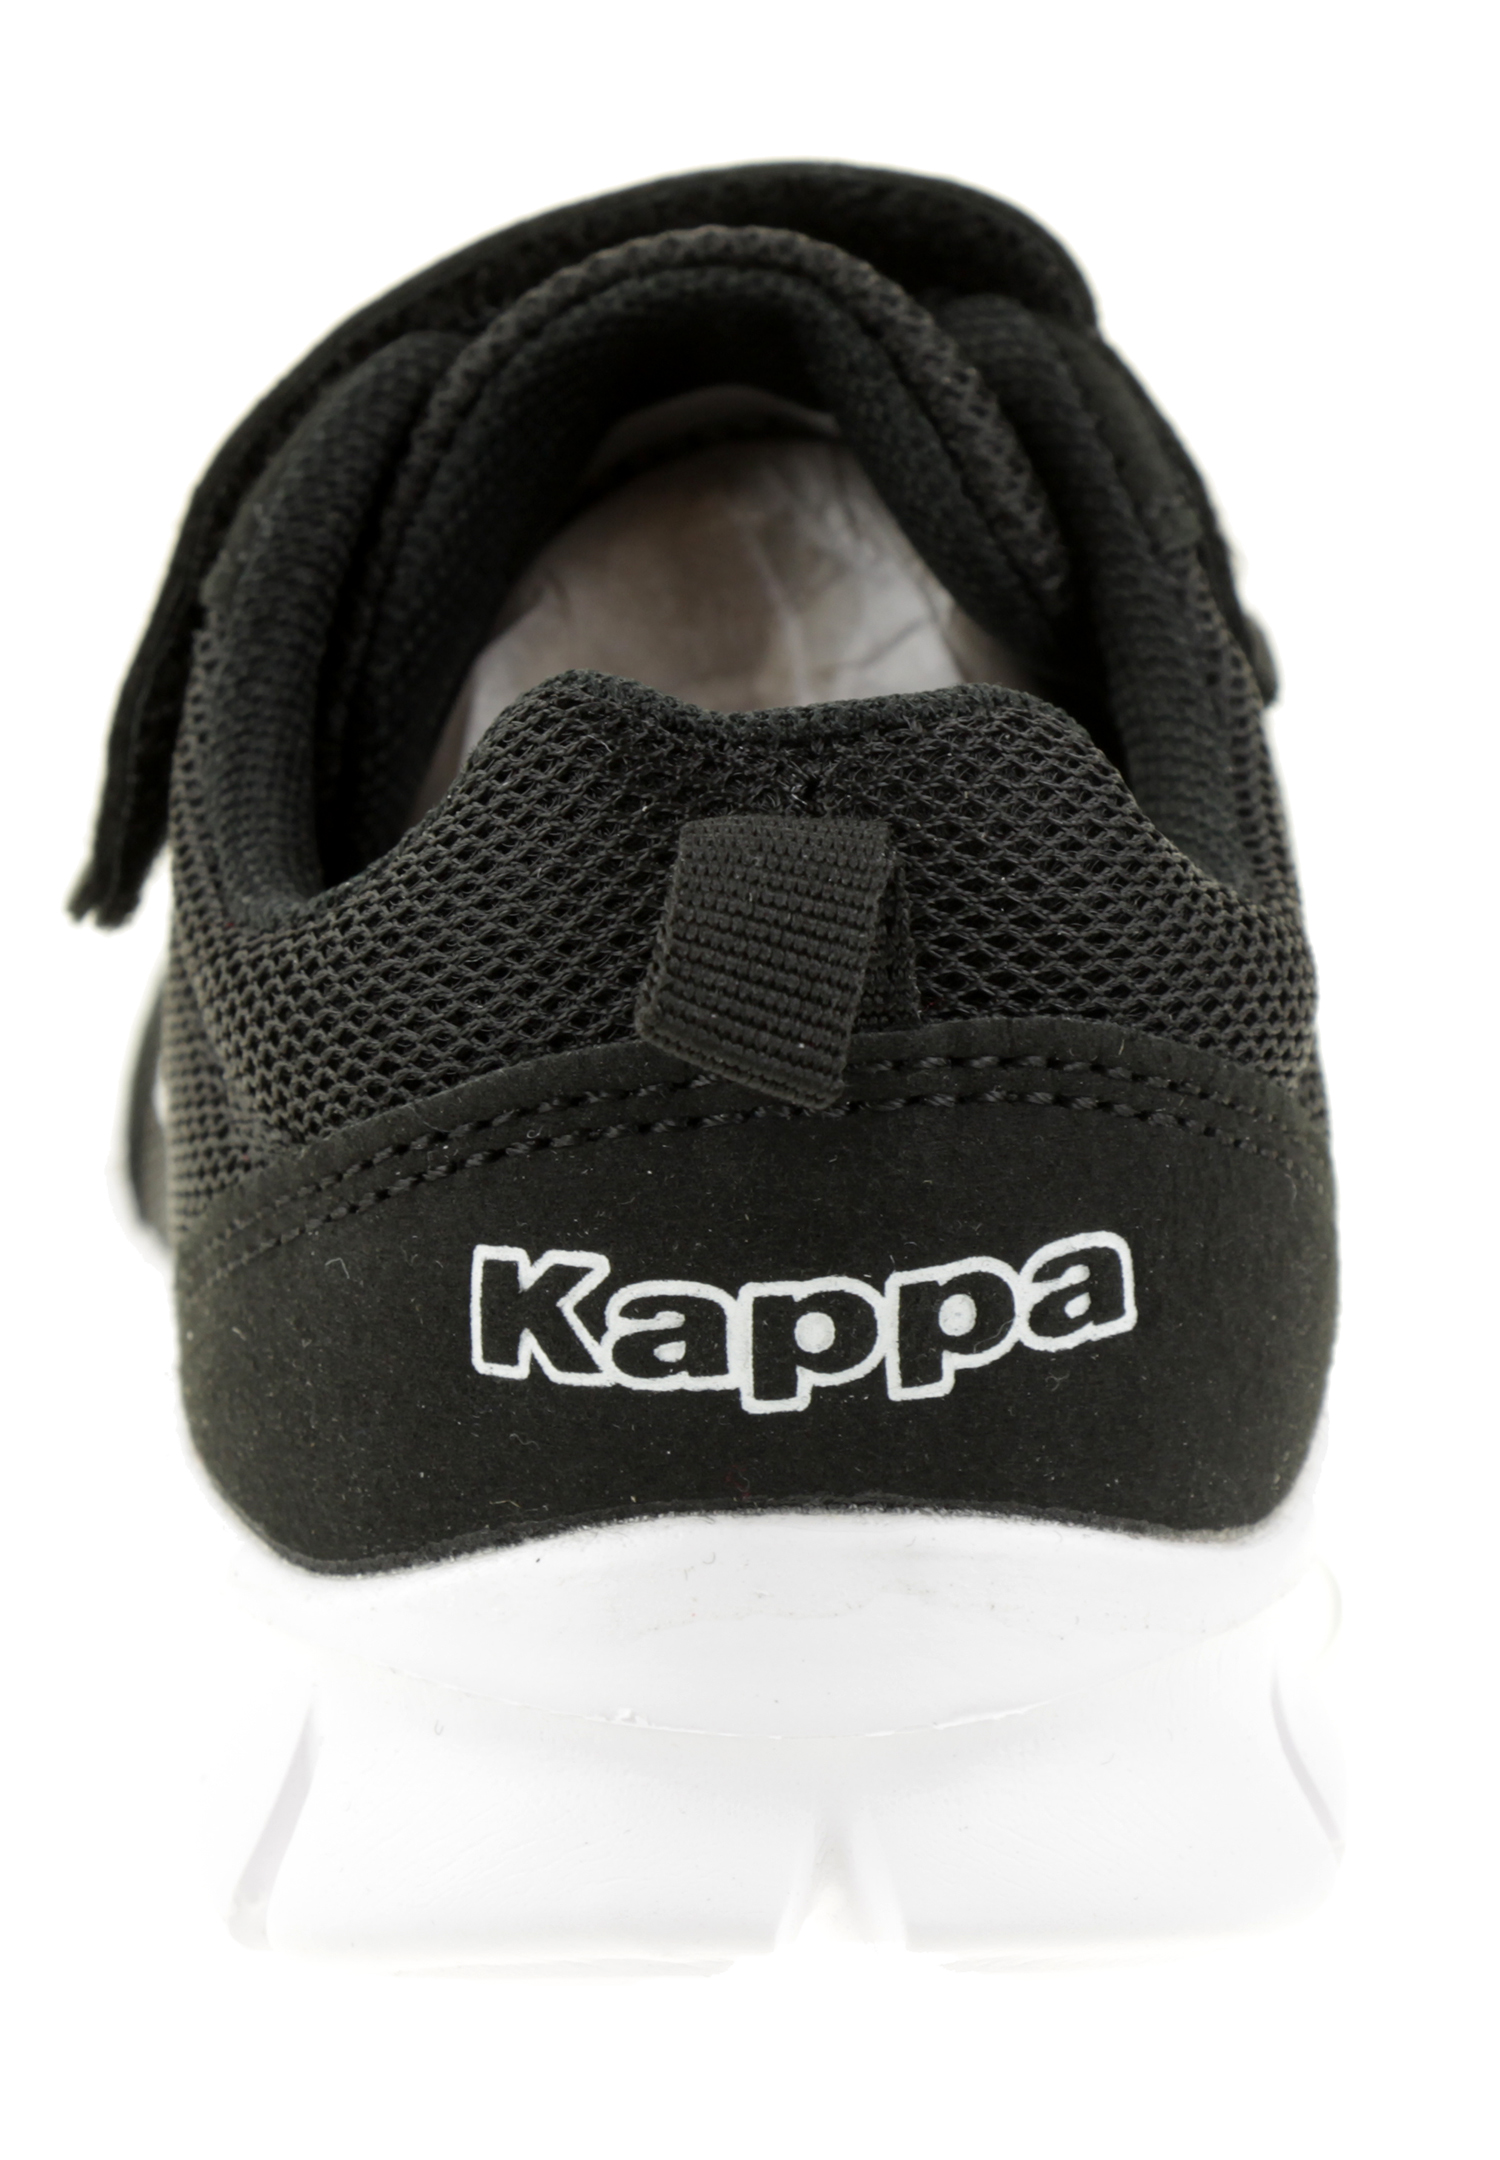 Kappa Unisex Kinder Sneaker Turnschuh 260982K 1110 Black/white